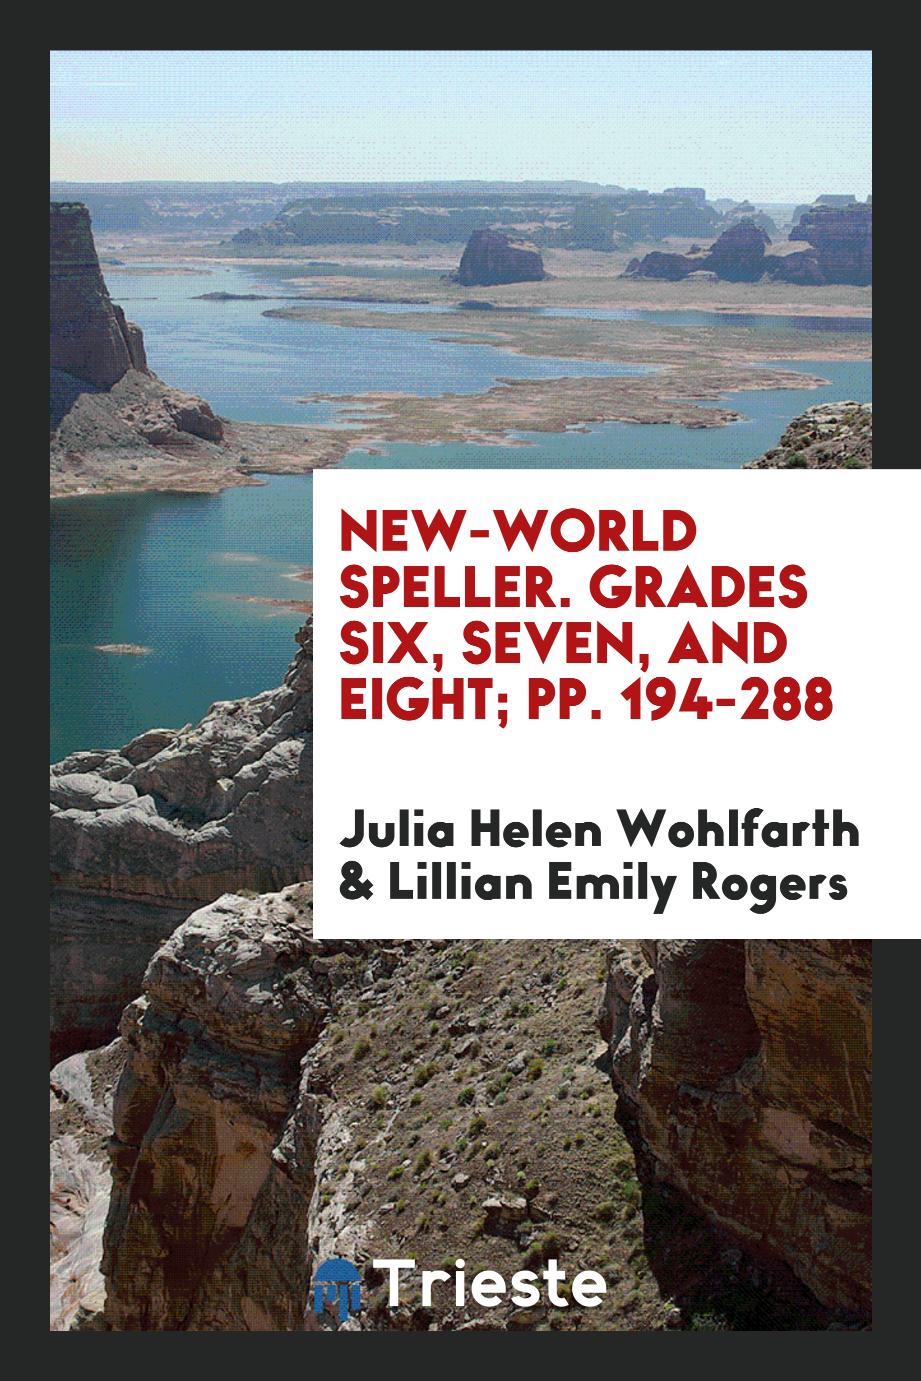 New-World Speller. Grades Six, Seven, and Eight; pp. 194-288